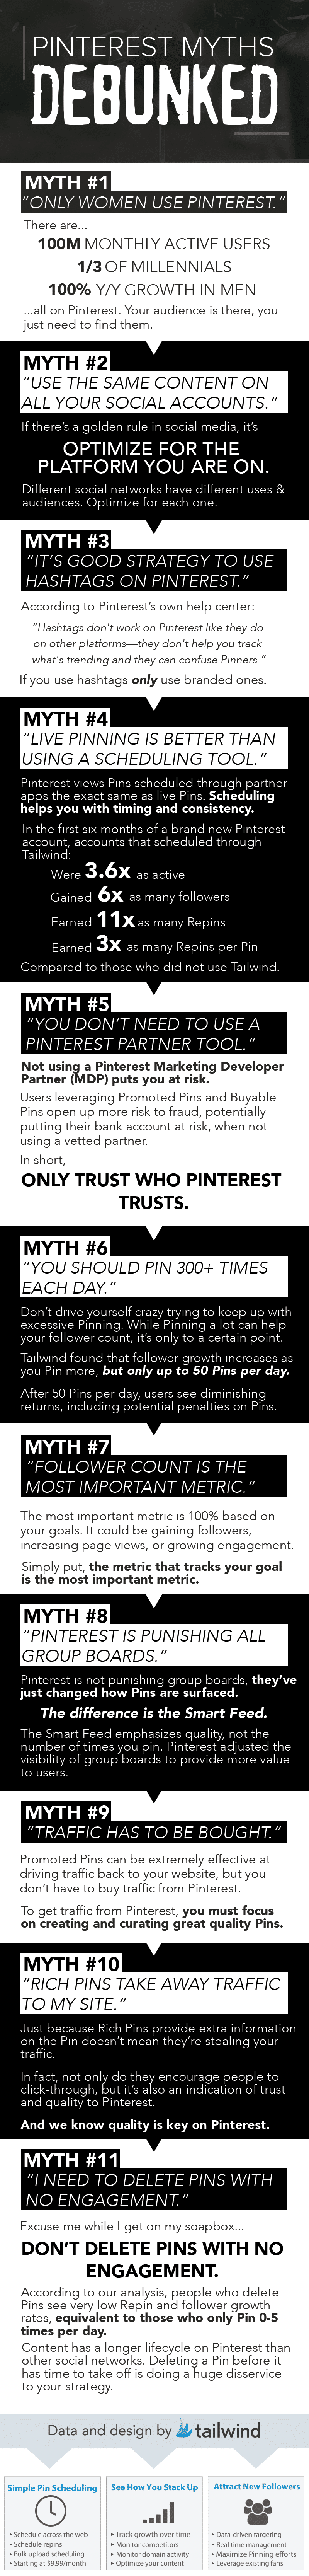 11 Pinterest Myths Debunked Infographic